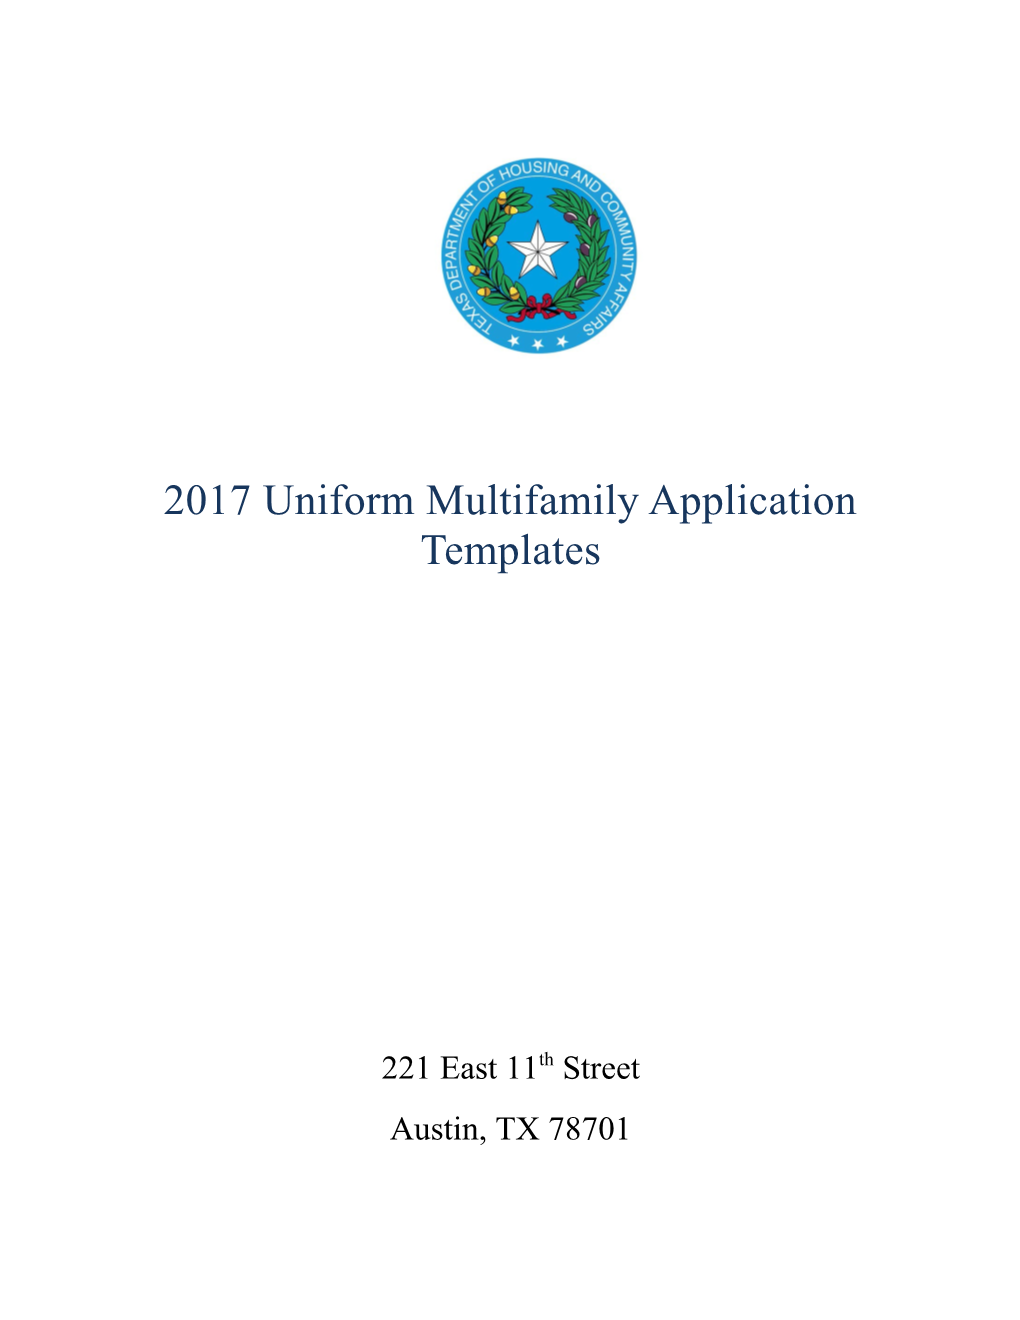 2017 Multifamily Uniform Application Templates